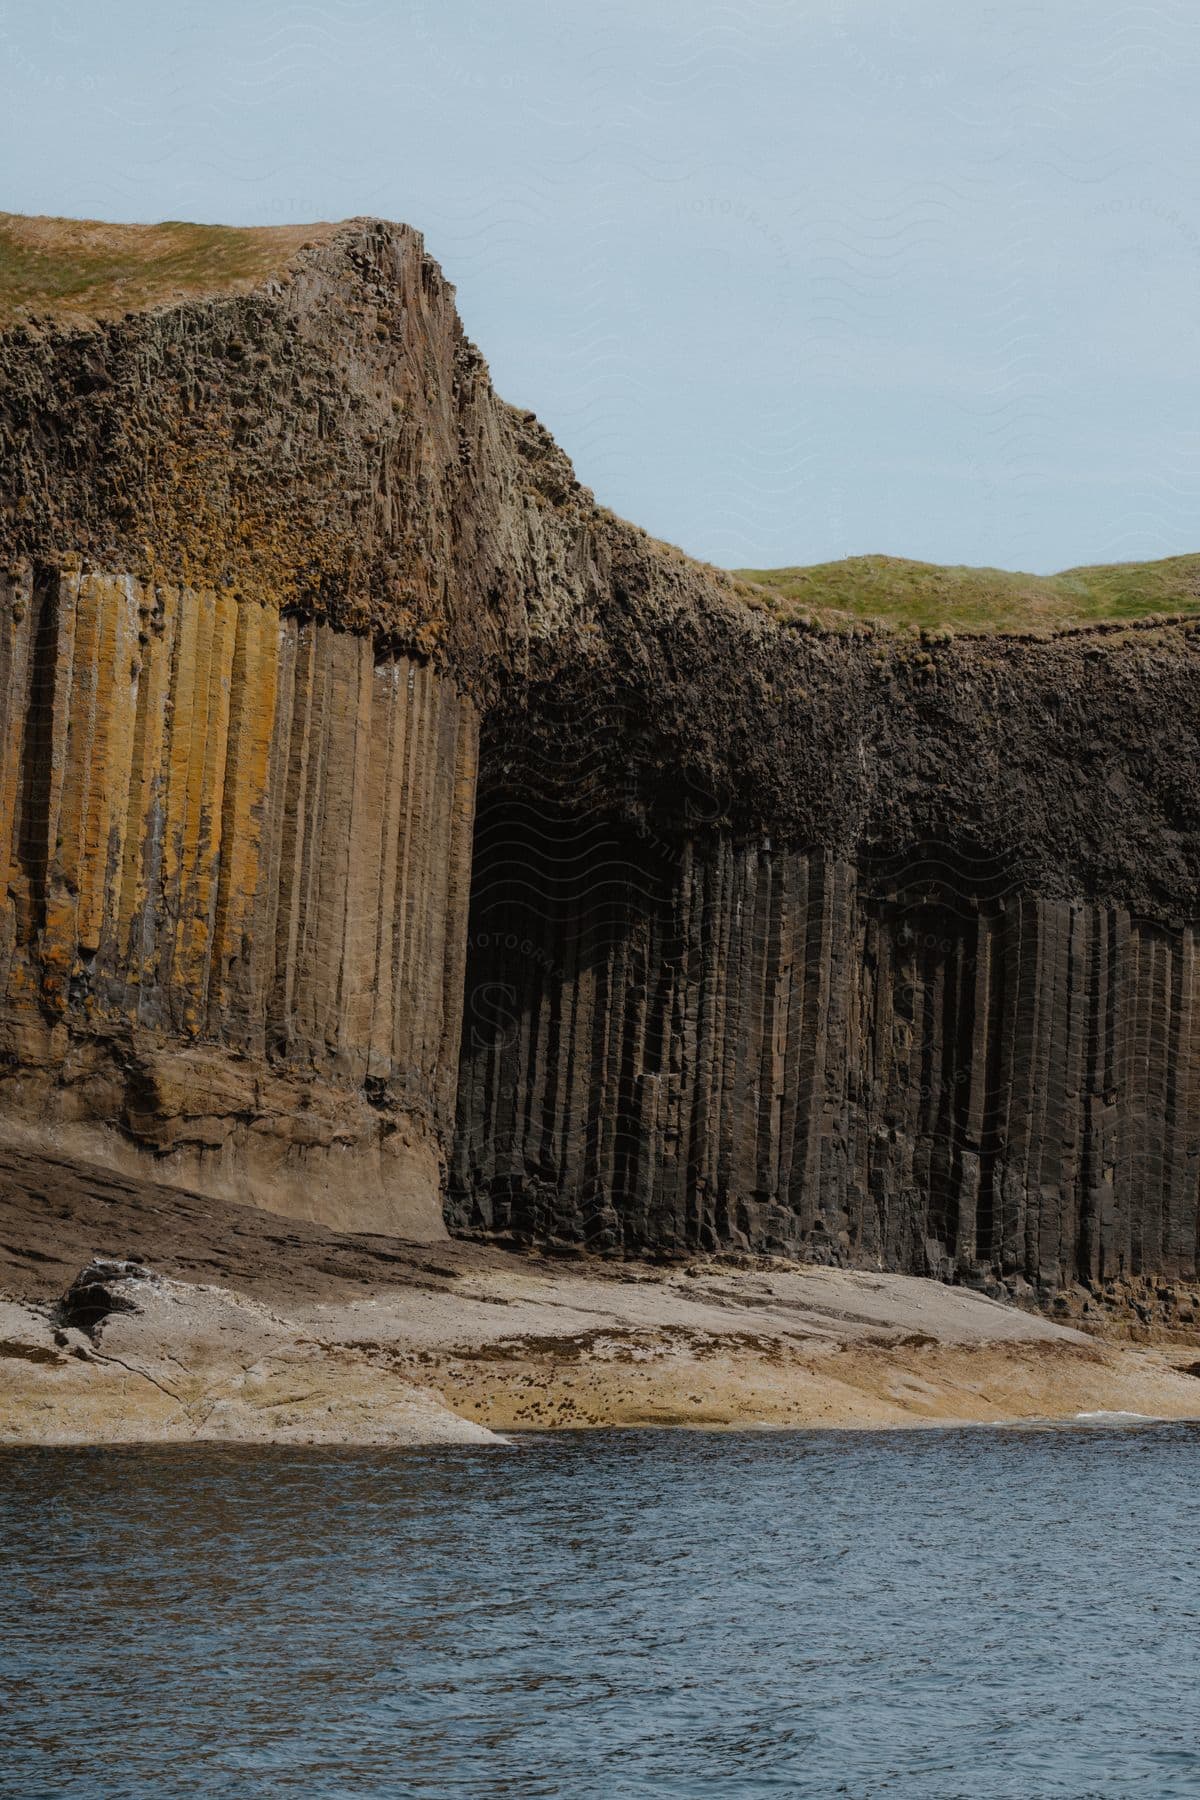 Columnar basalt formations on a cliff beside calm water.